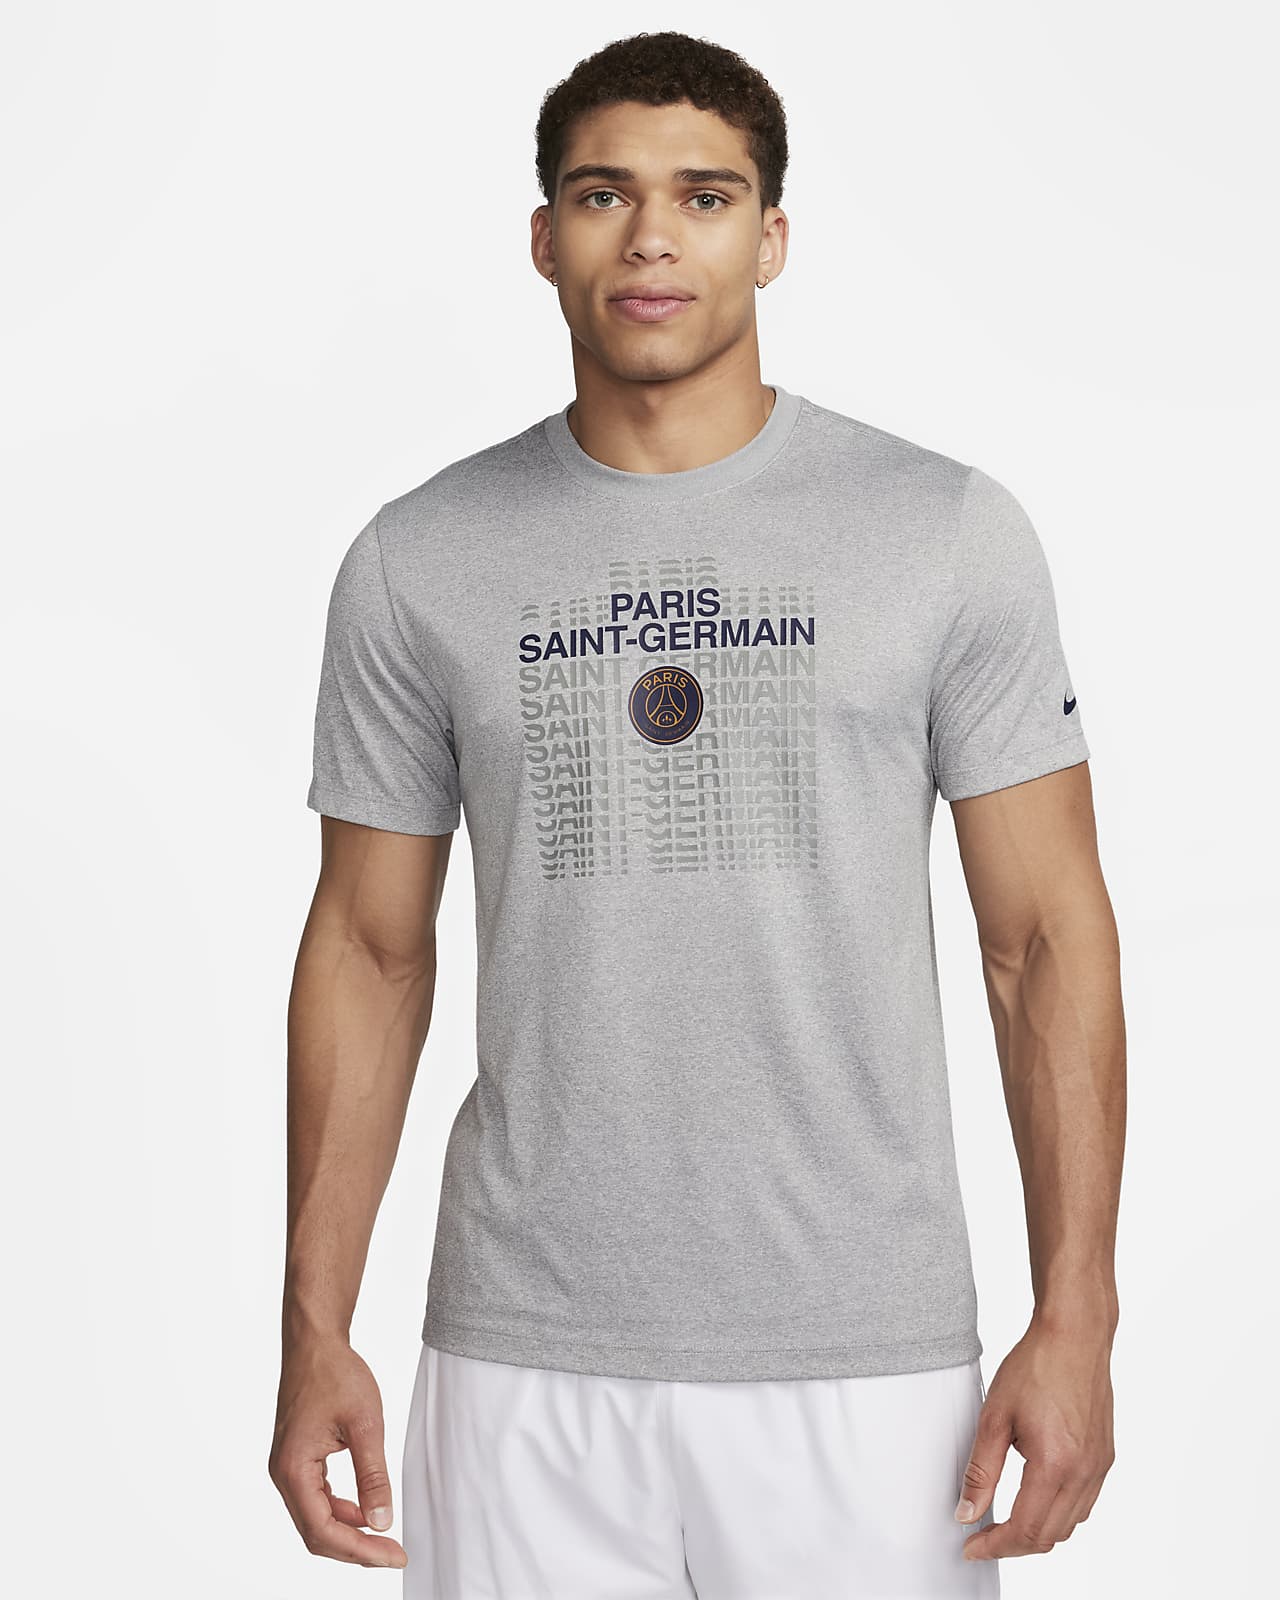 Paris Saint-Germain Men's Nike Soccer T-Shirt